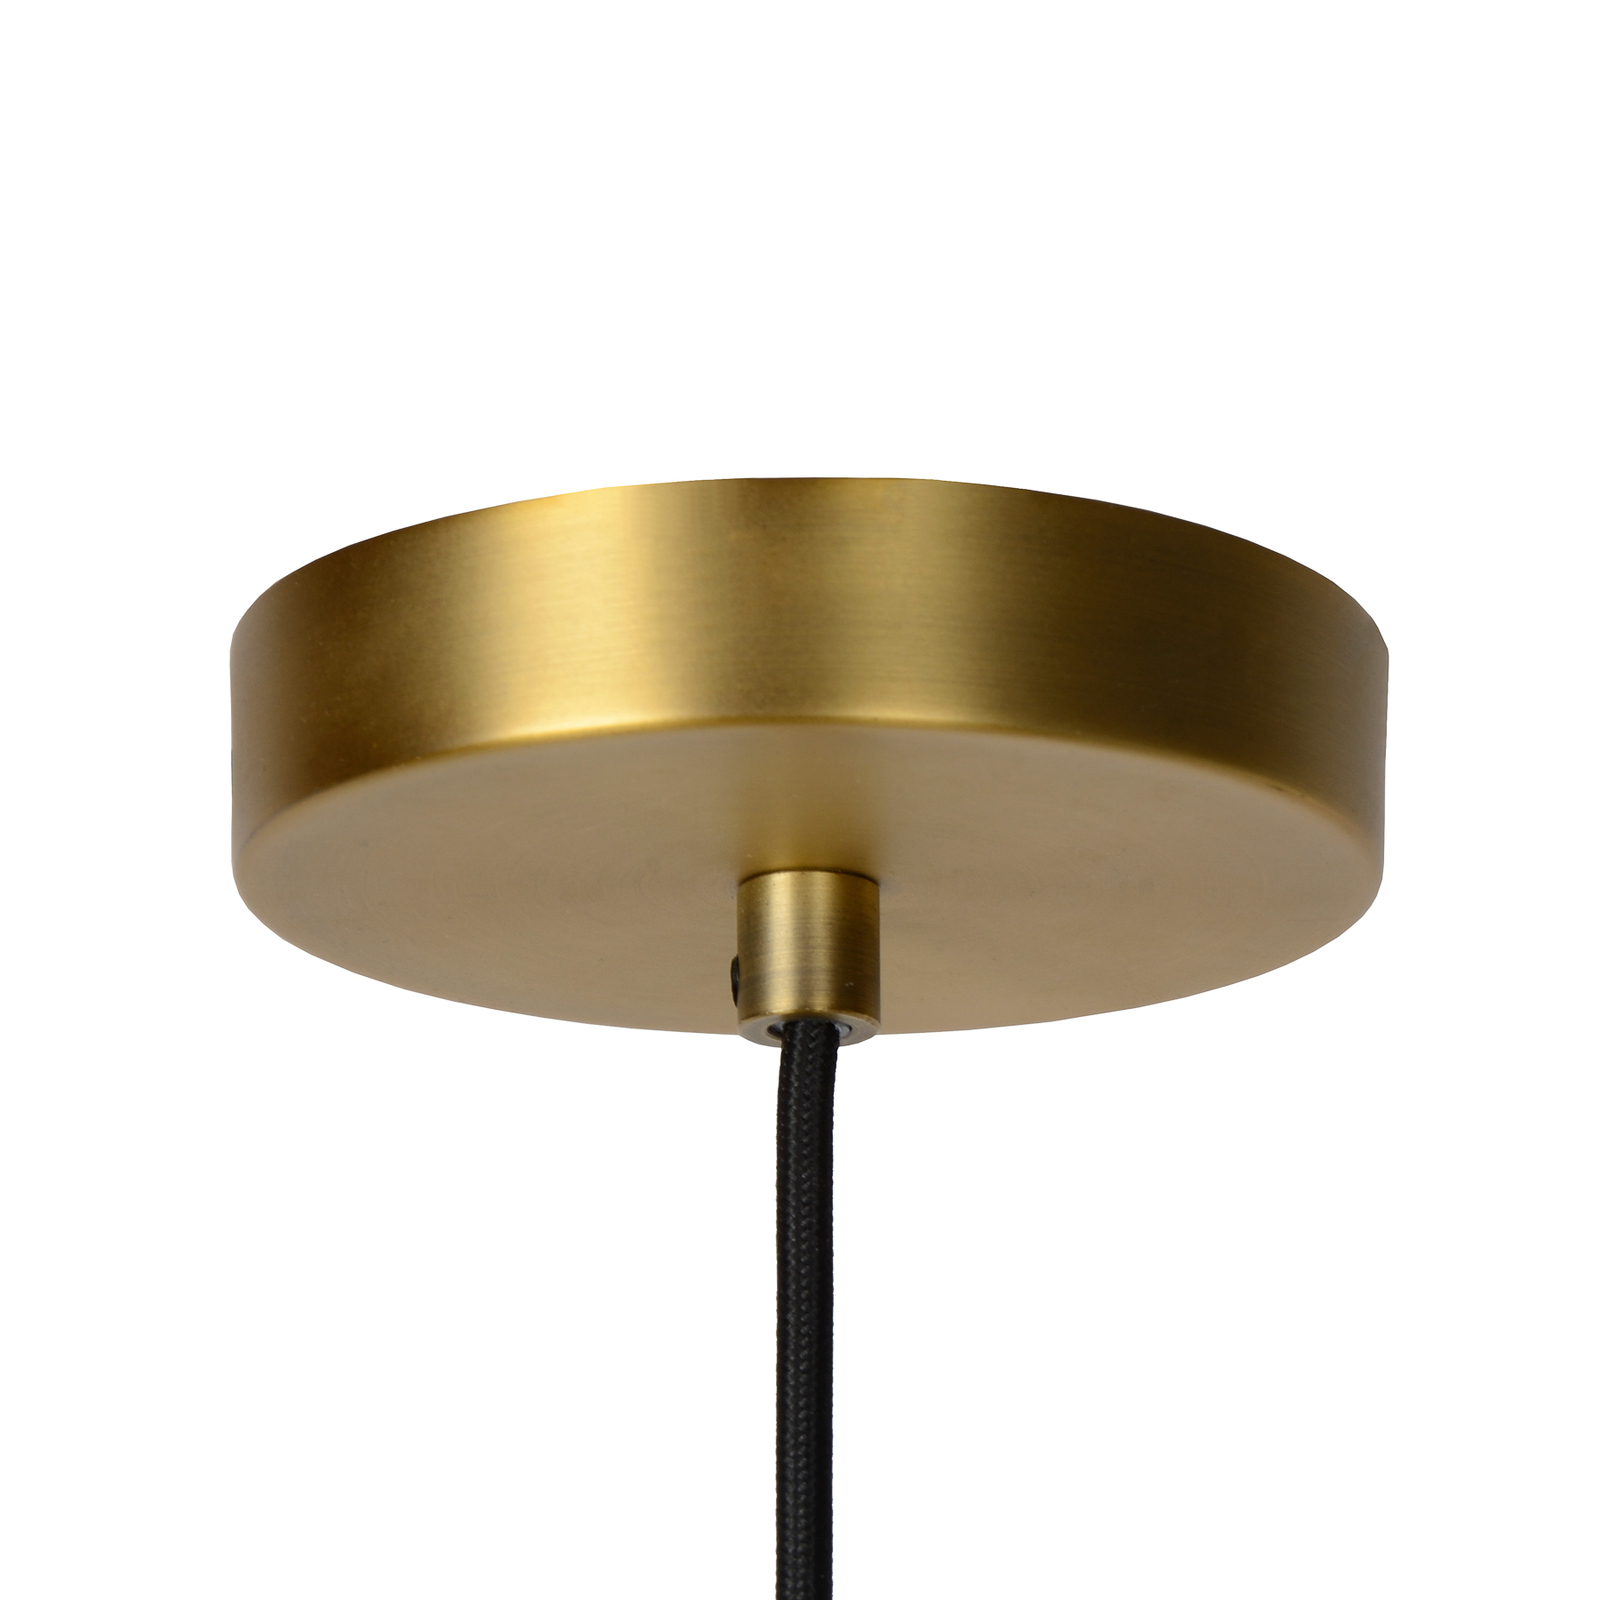 Firmin glazen hanglamp, Ø 20 cm